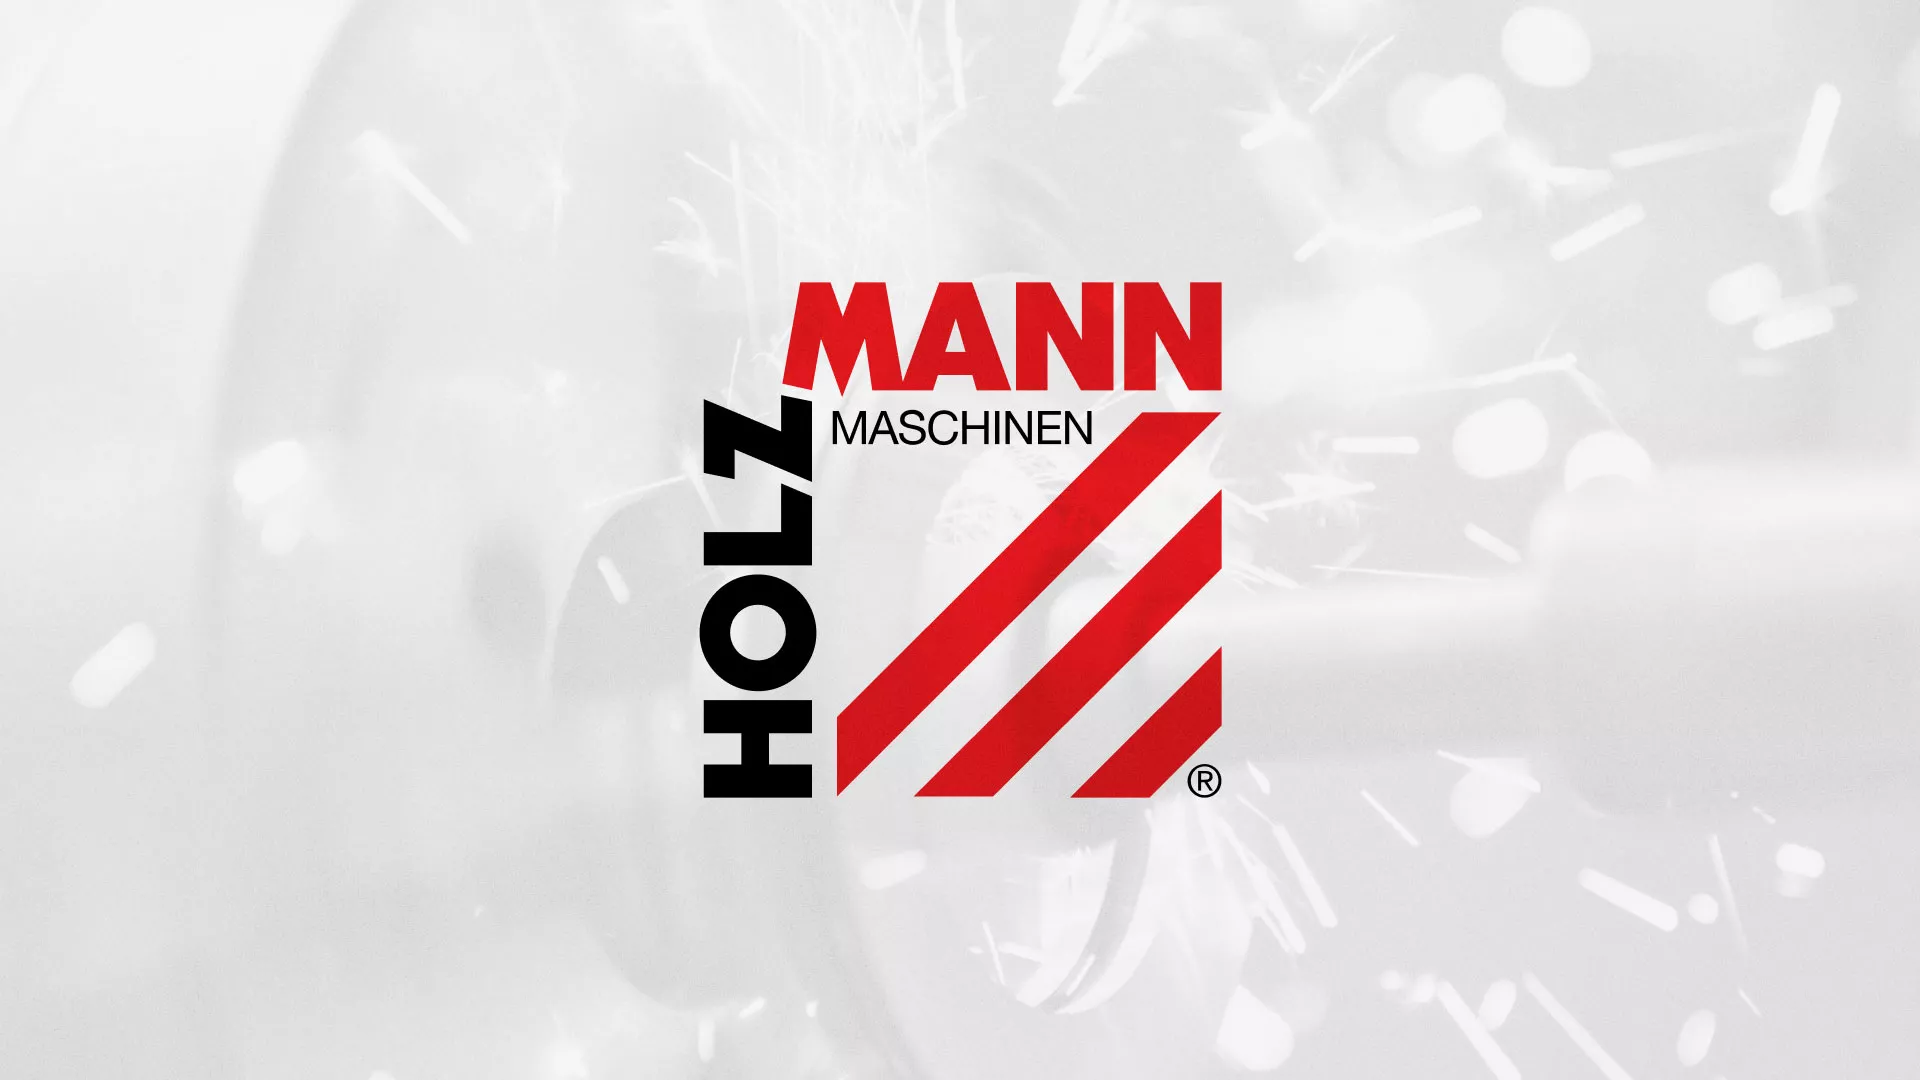 Создание сайта компании «HOLZMANN Maschinen GmbH» в Бирюче